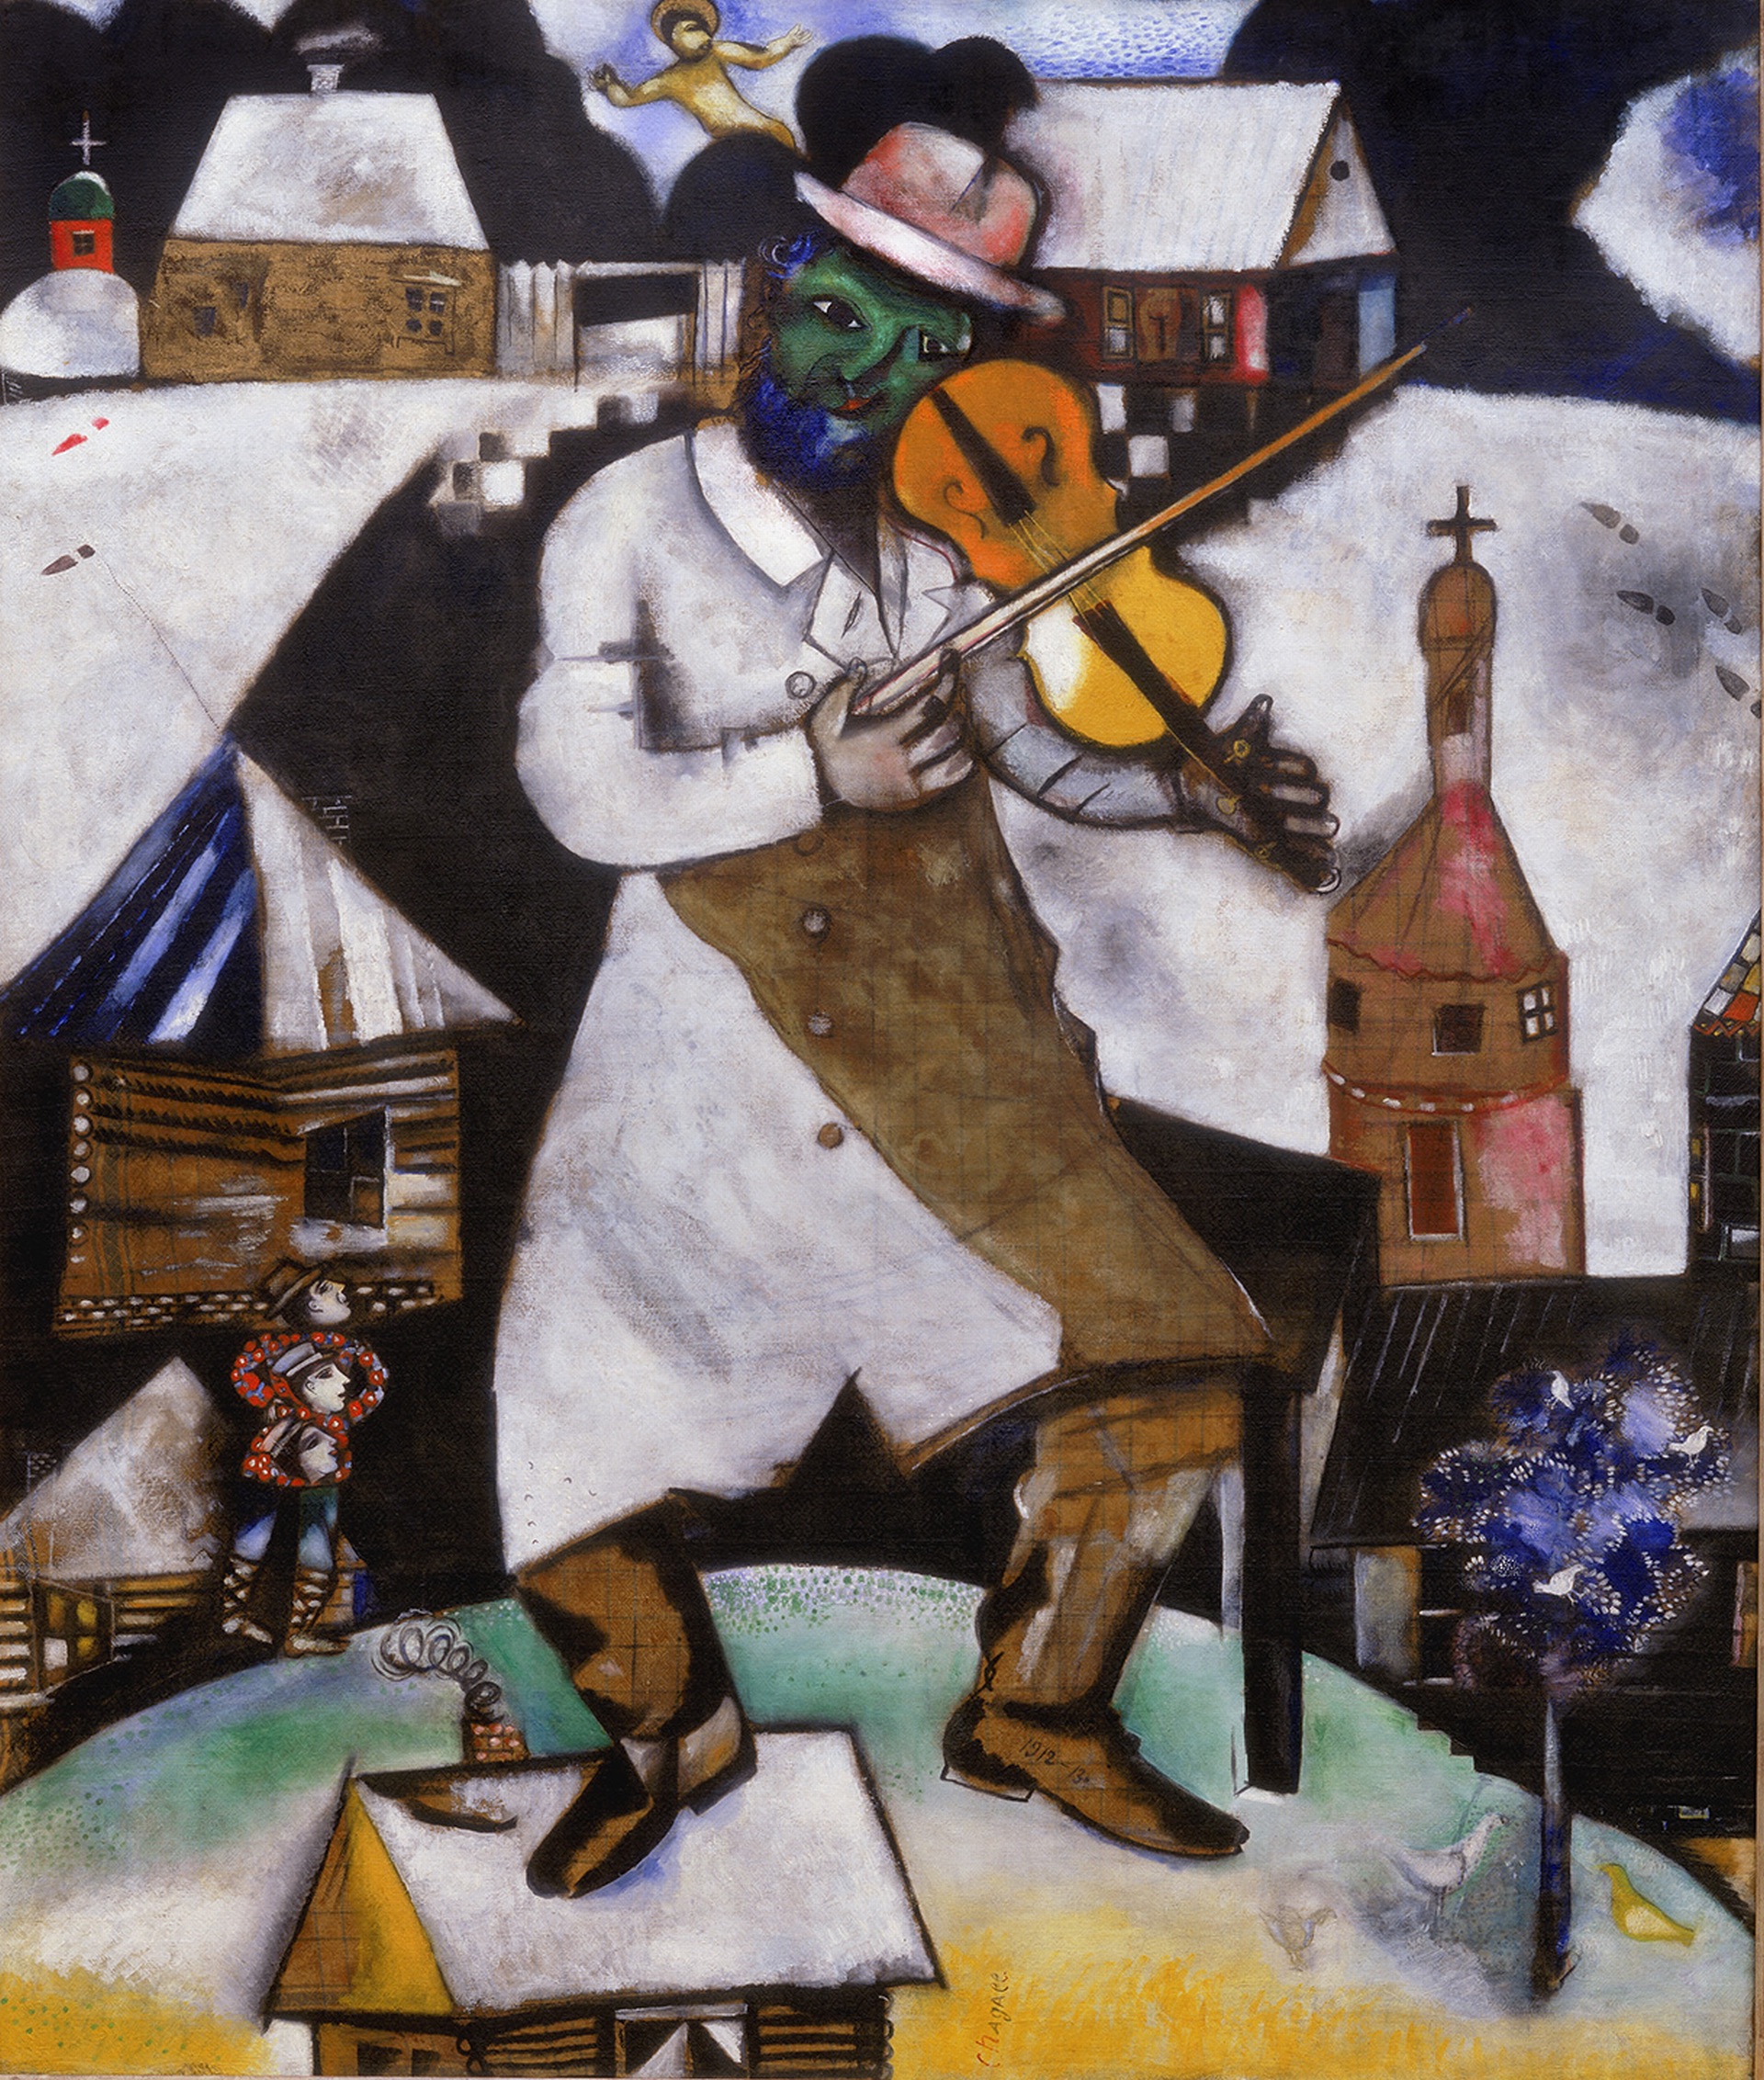 Le Violiniste by Marc Chagall - 1912-1913 - 196.5 x 166.5 cm Stedelijk Museum